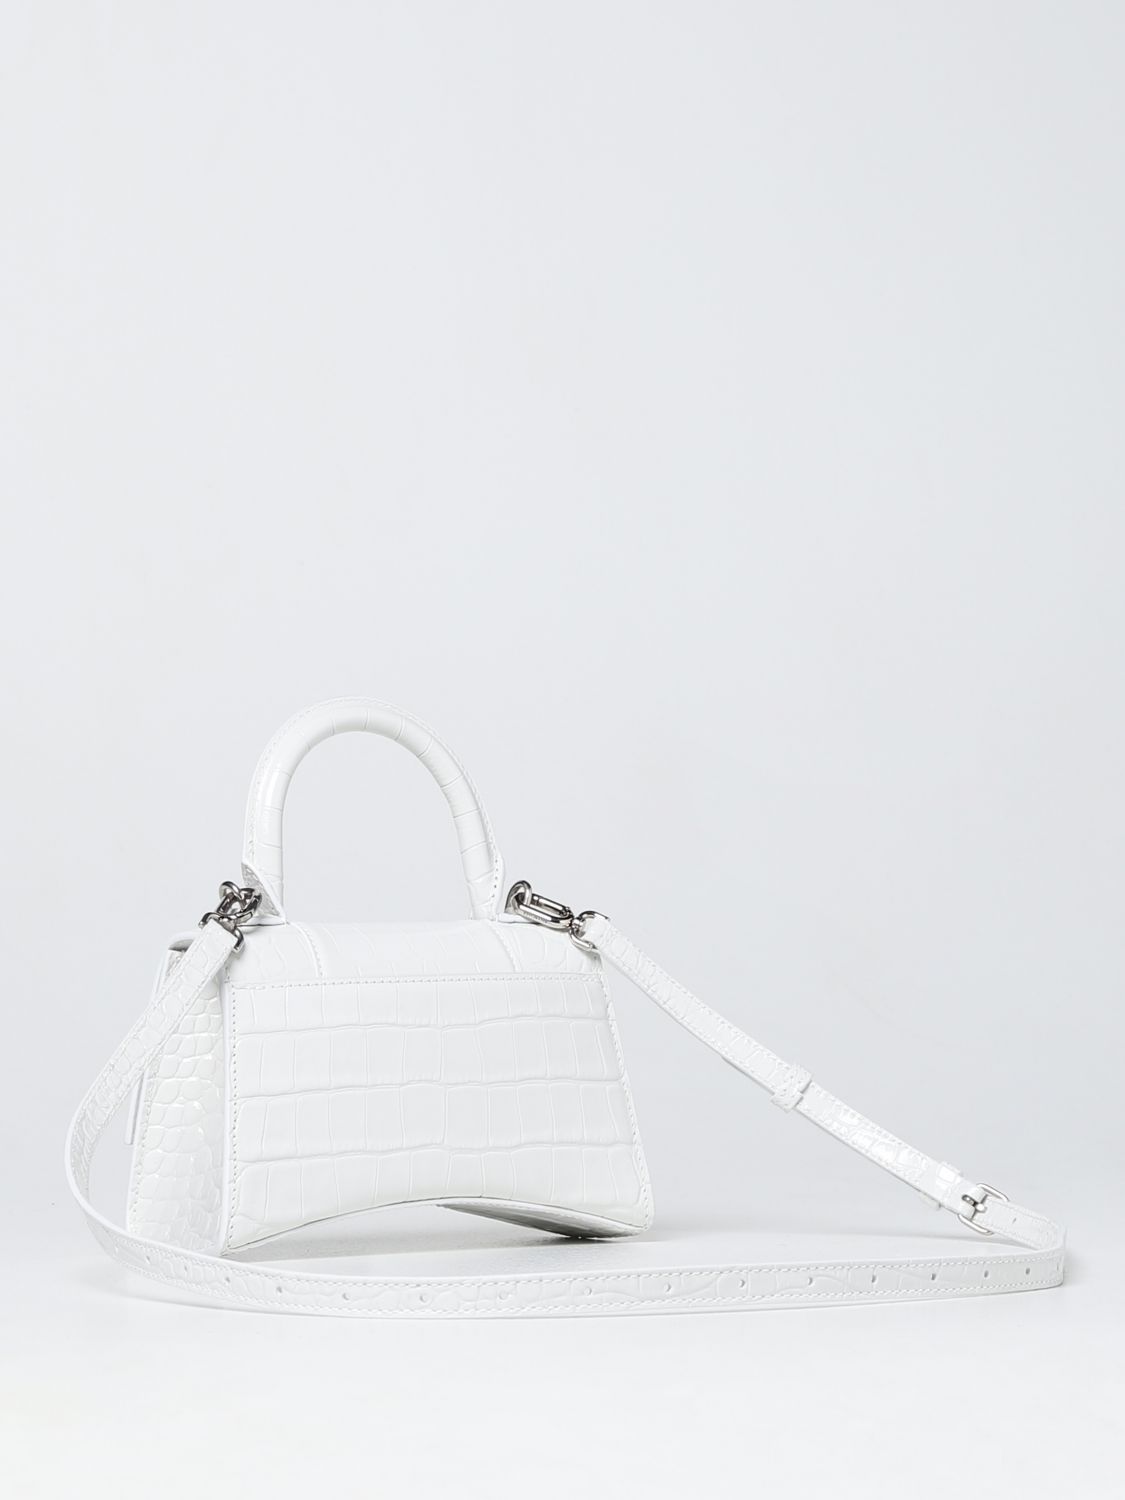 Hourglass top handle XS Balenciaga bag in crocodile print leather